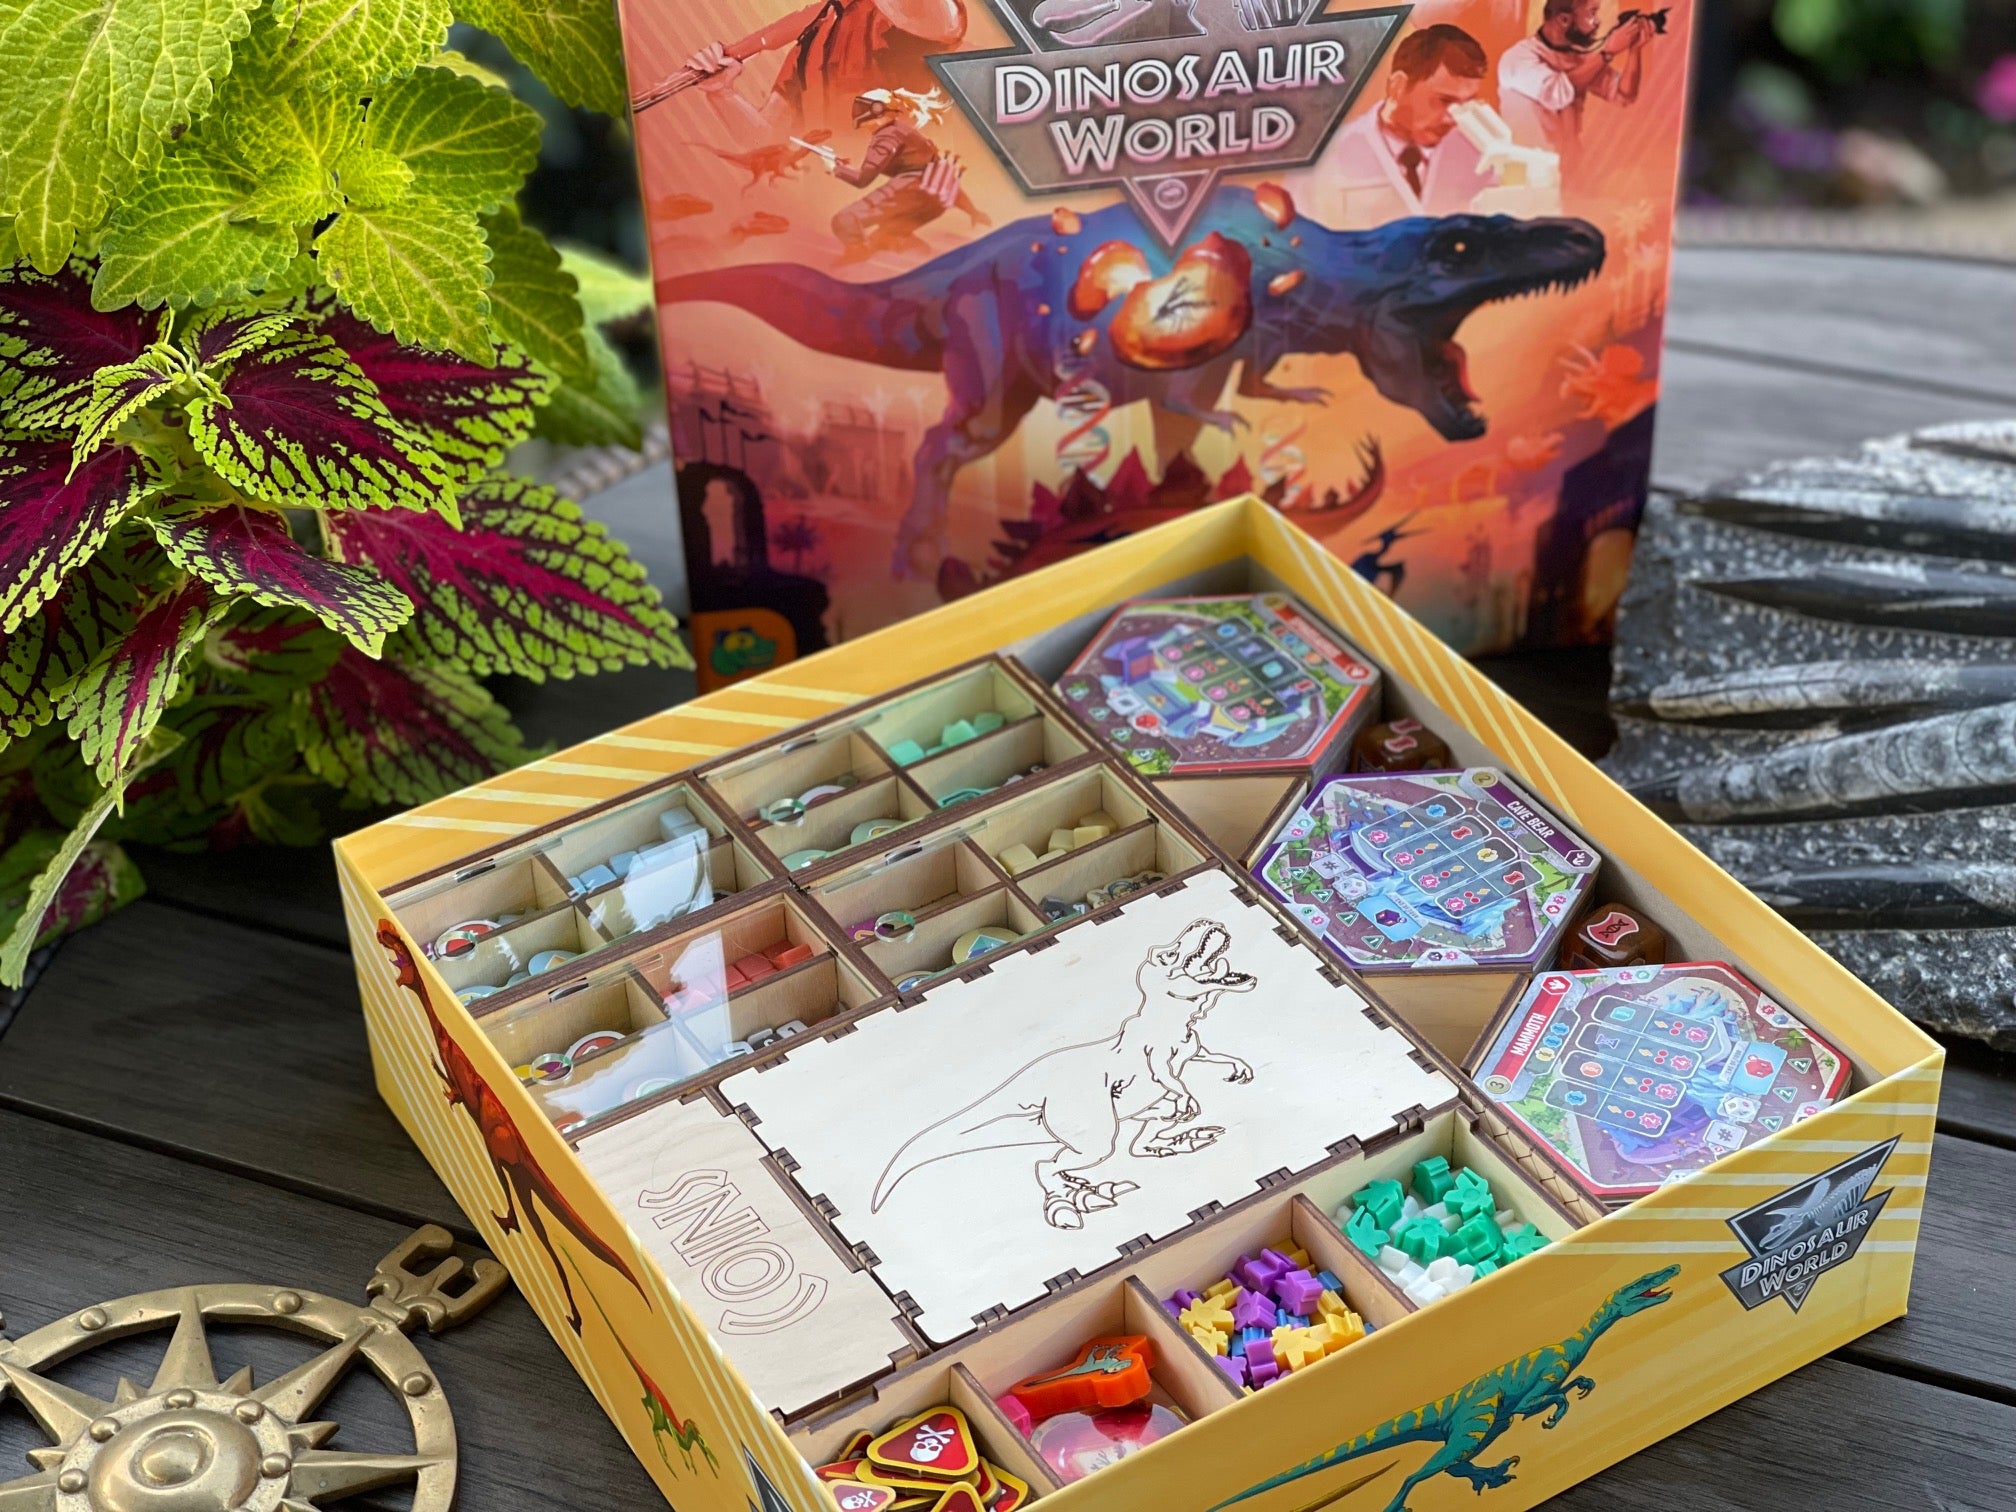 Draftosaurus Game Box Organizer 